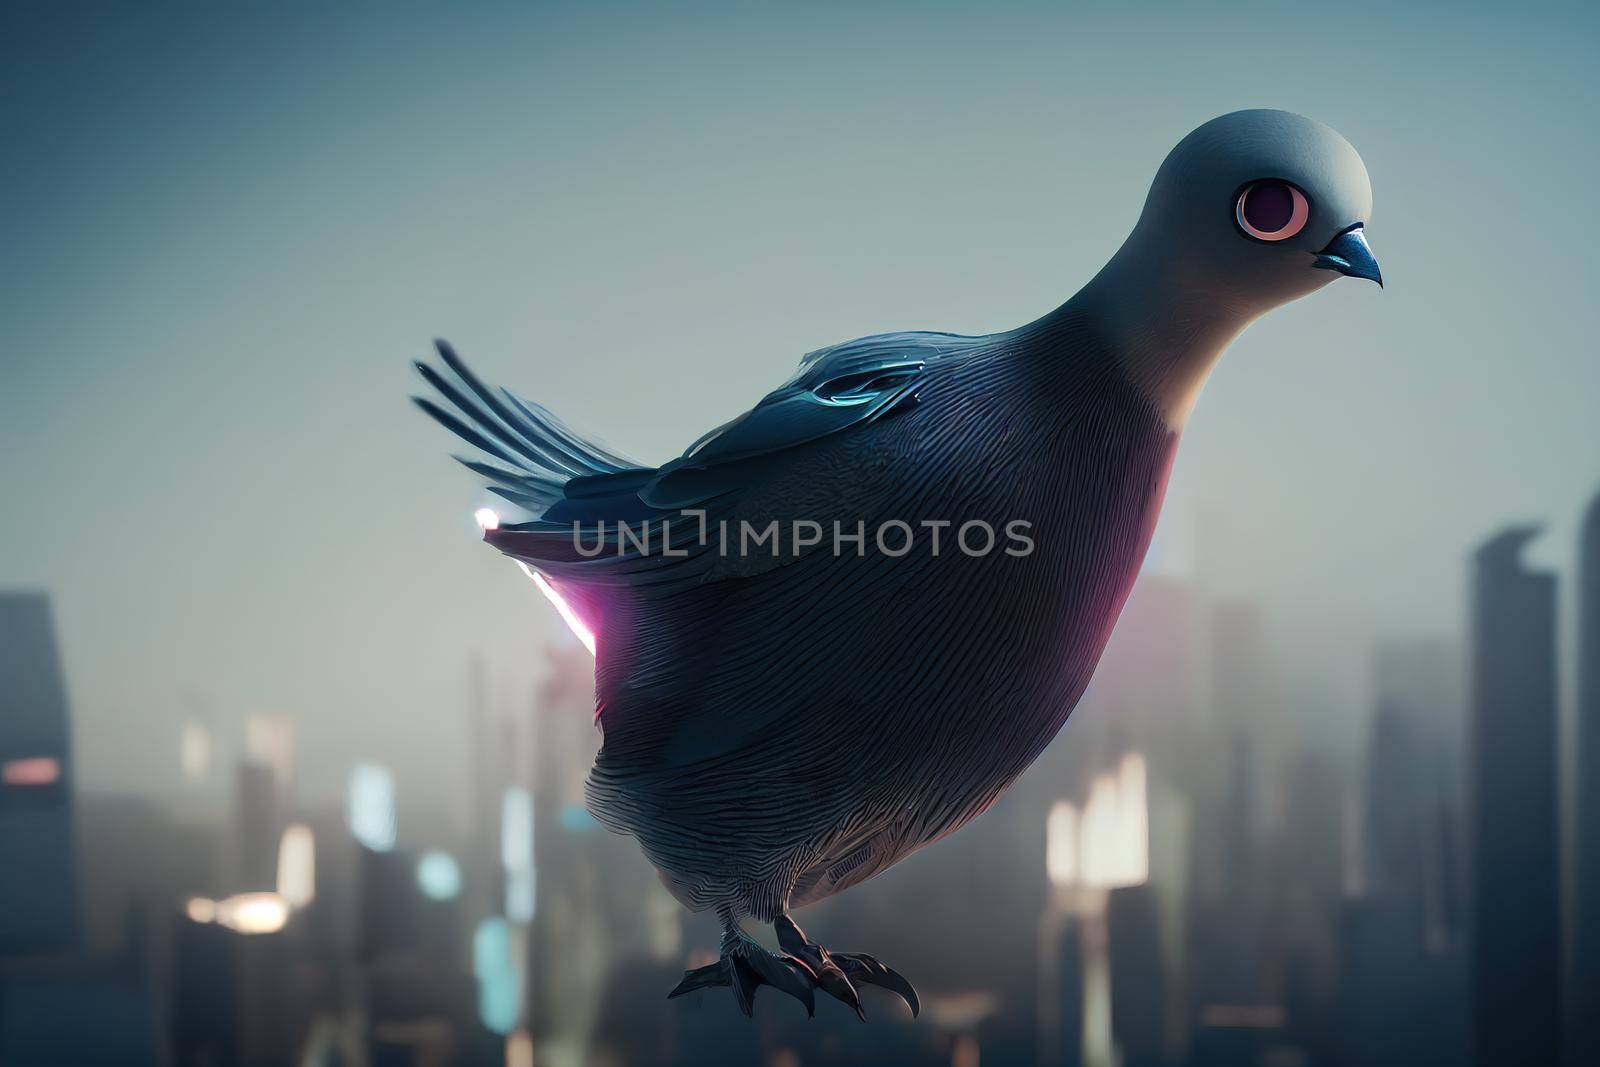 Futuristic pigeon character cartoon stylised by 2ragon